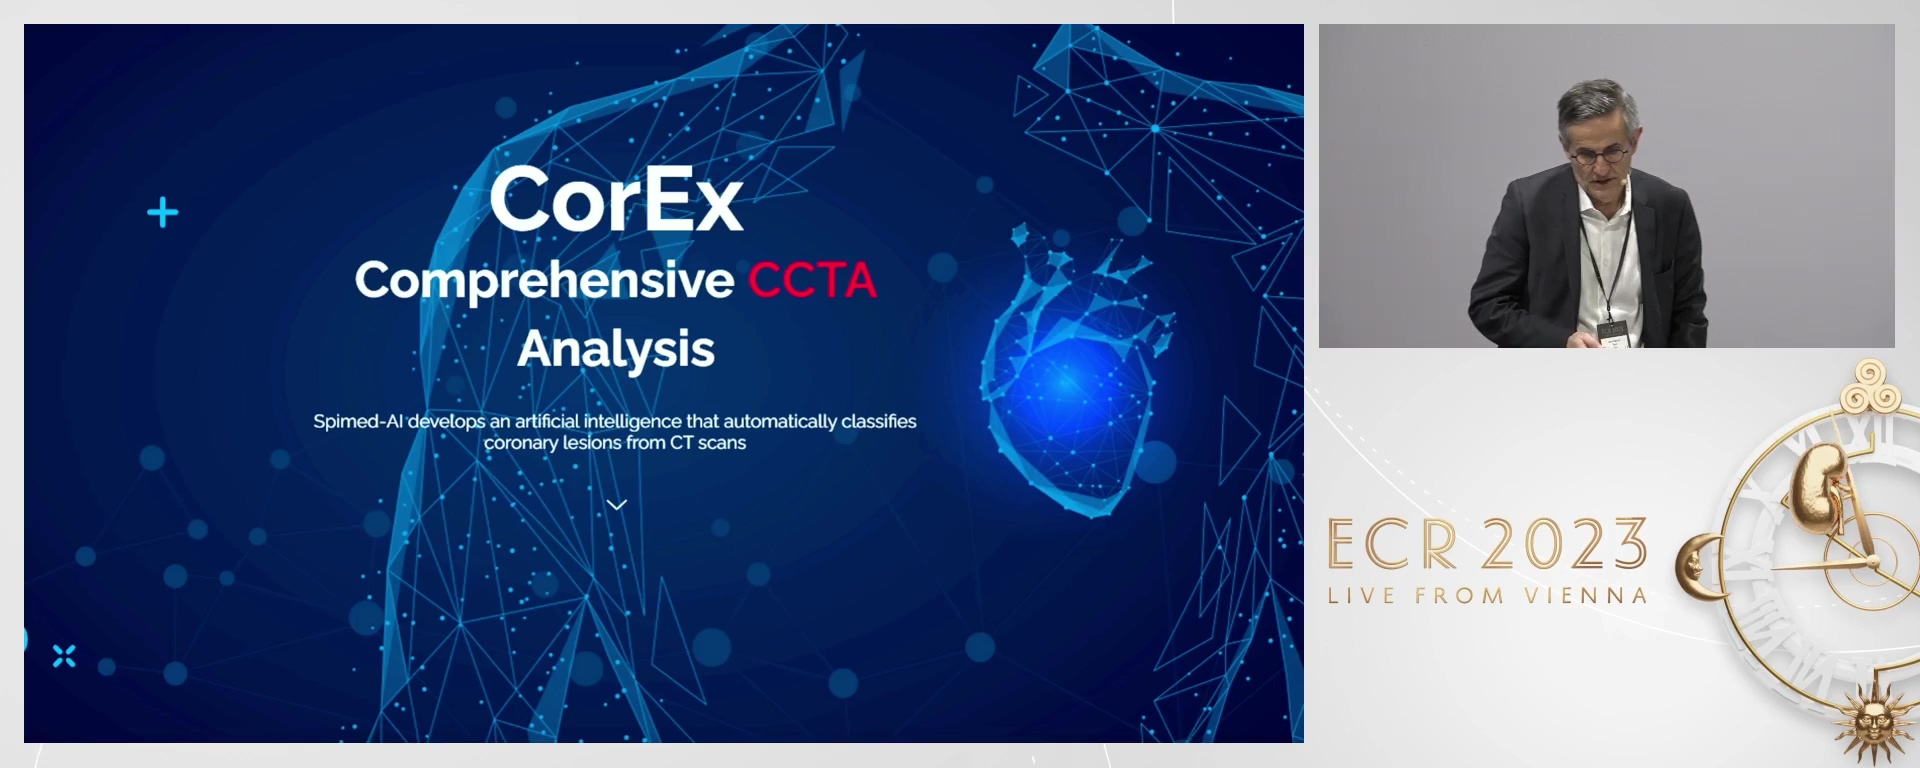 CorEx: a Comprehensive CCTA Analysis using multiple Deep Learning Models - Jean-Francois  Paul, PARIS / FR